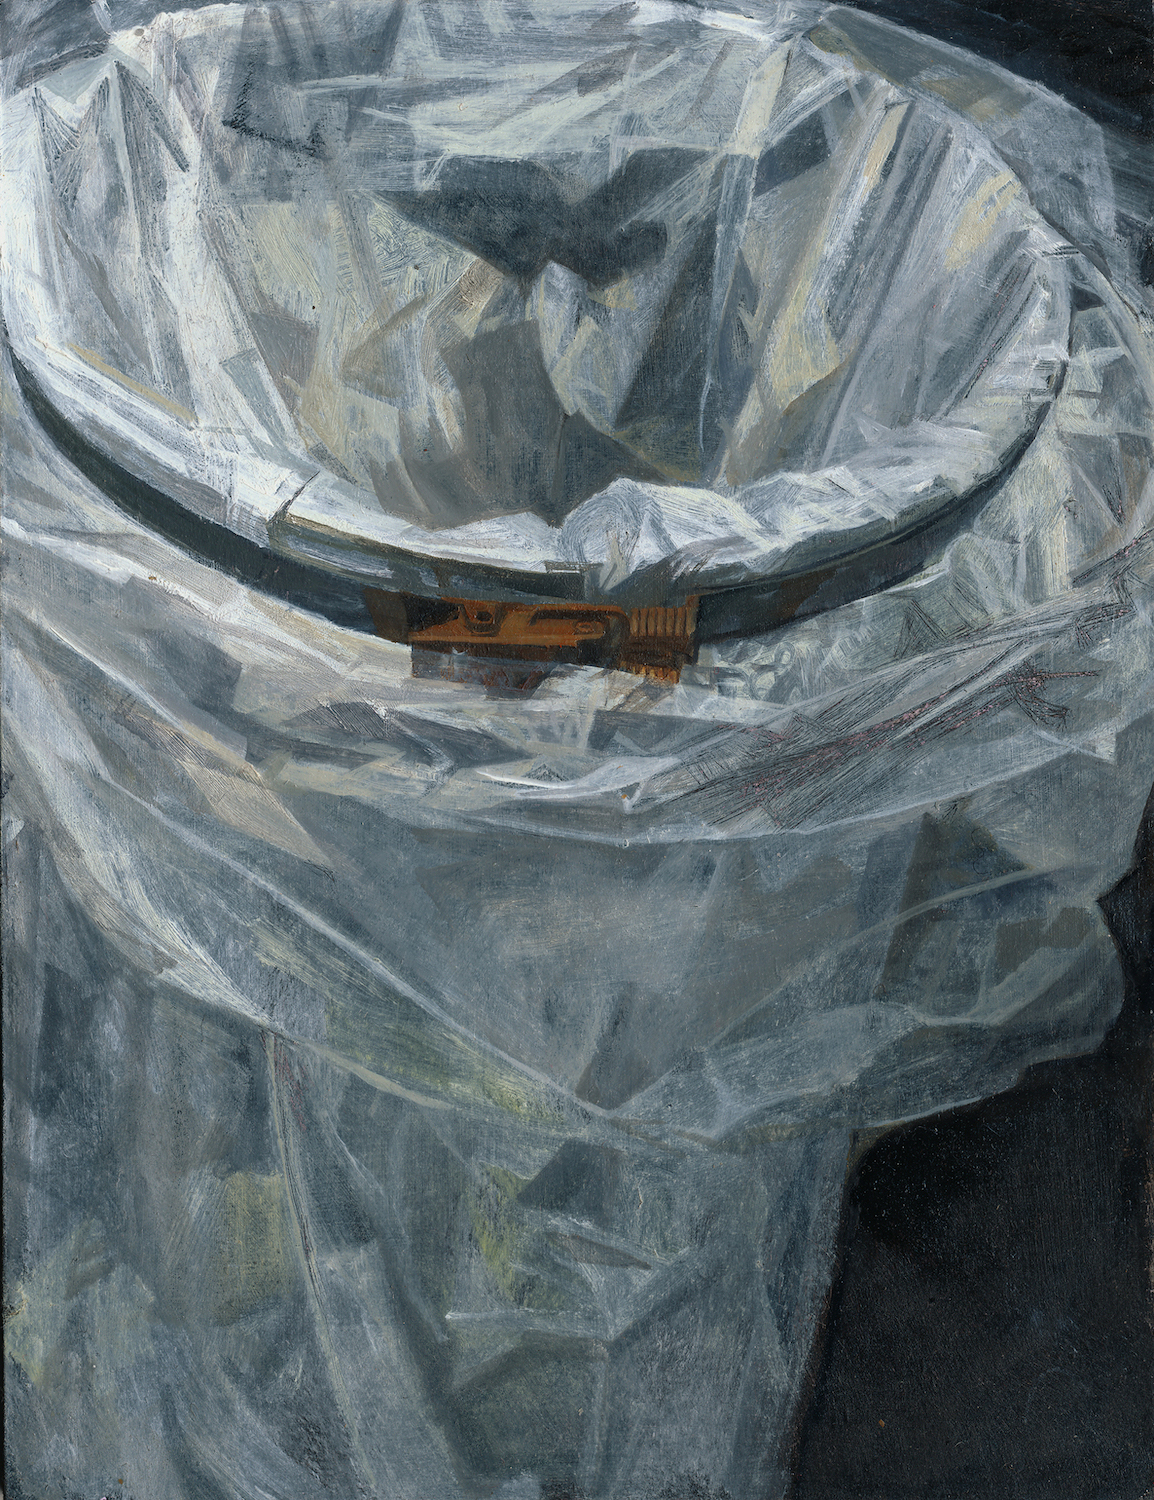 'Plastic', Kate Wilson, Oil on board, 21 x 16 cm